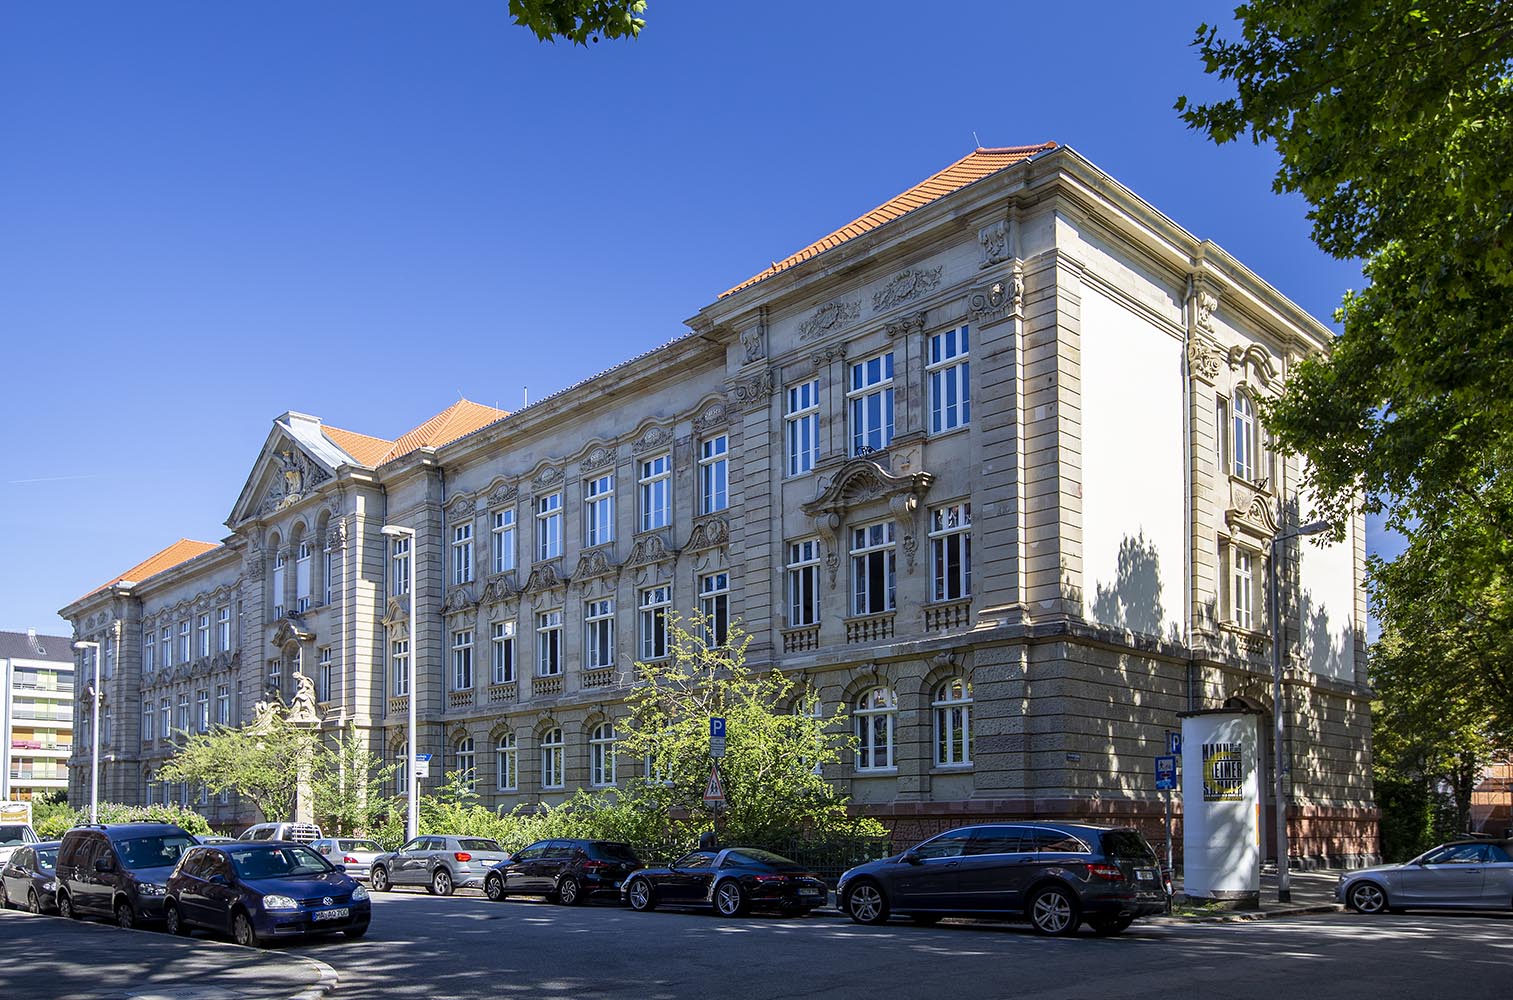 Tulla-Realschule, Mannheim